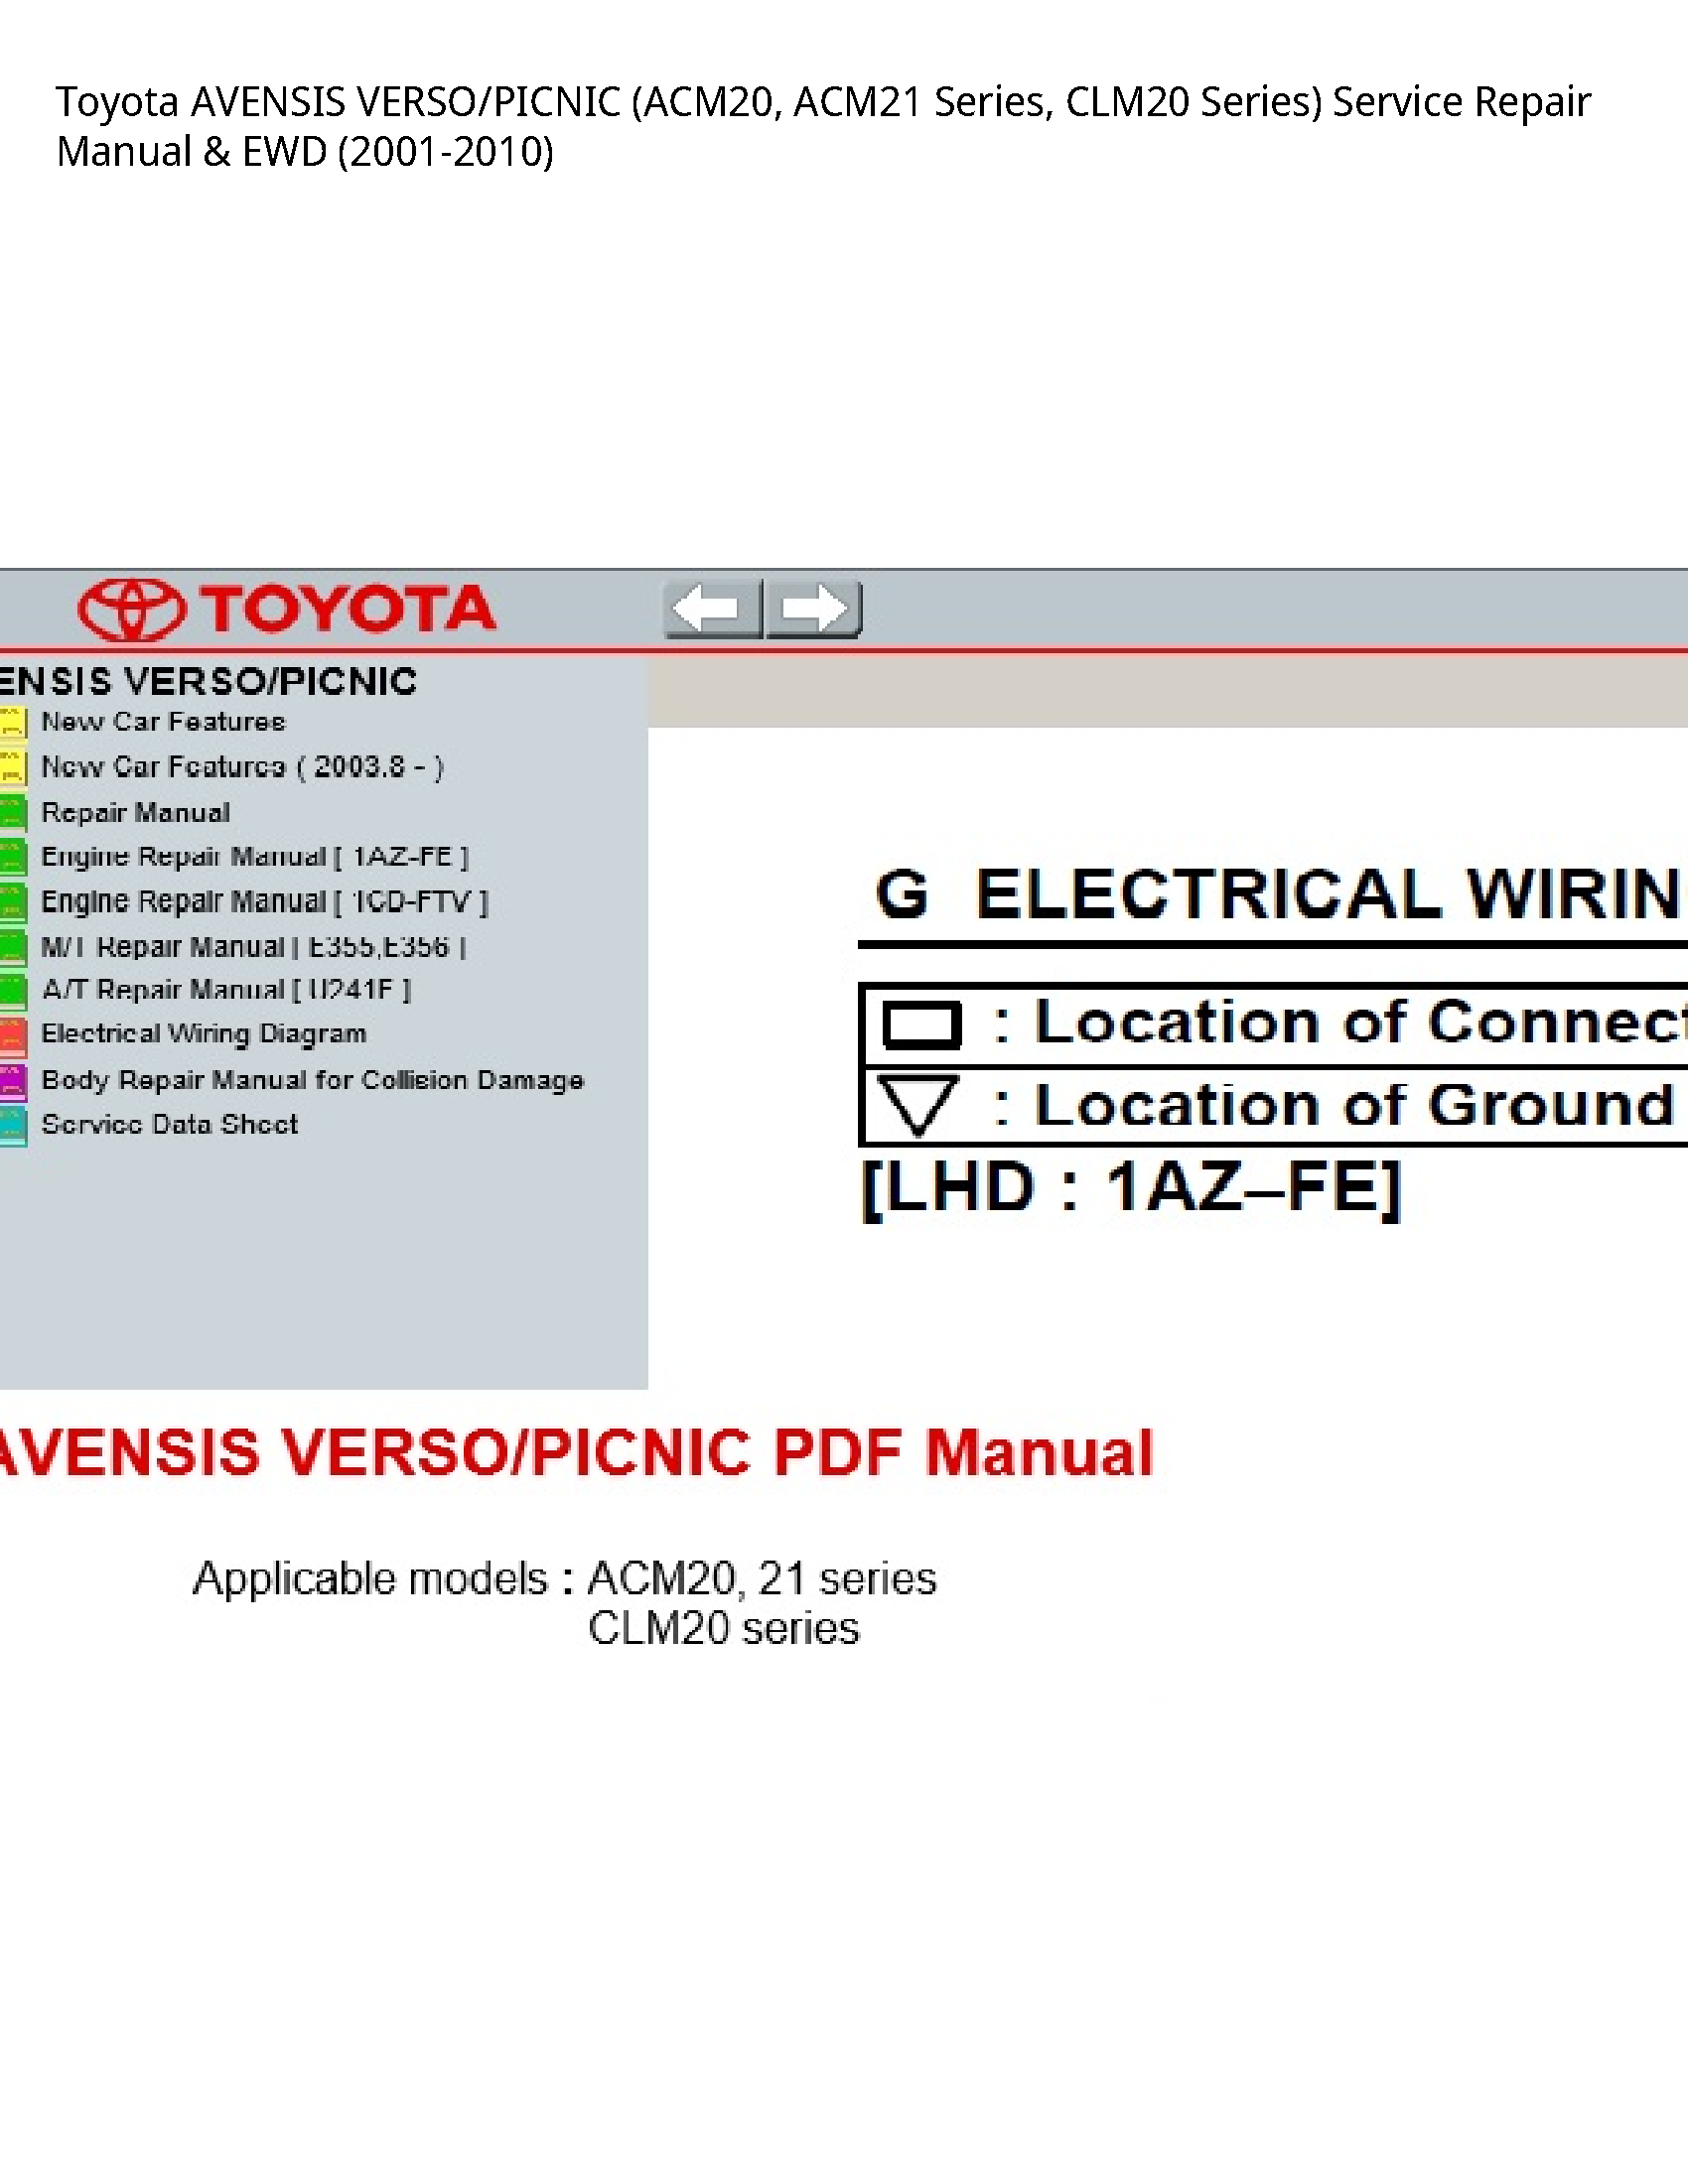 Toyota (ACM20 AVENSIS VERSO/PICNIC Series manual